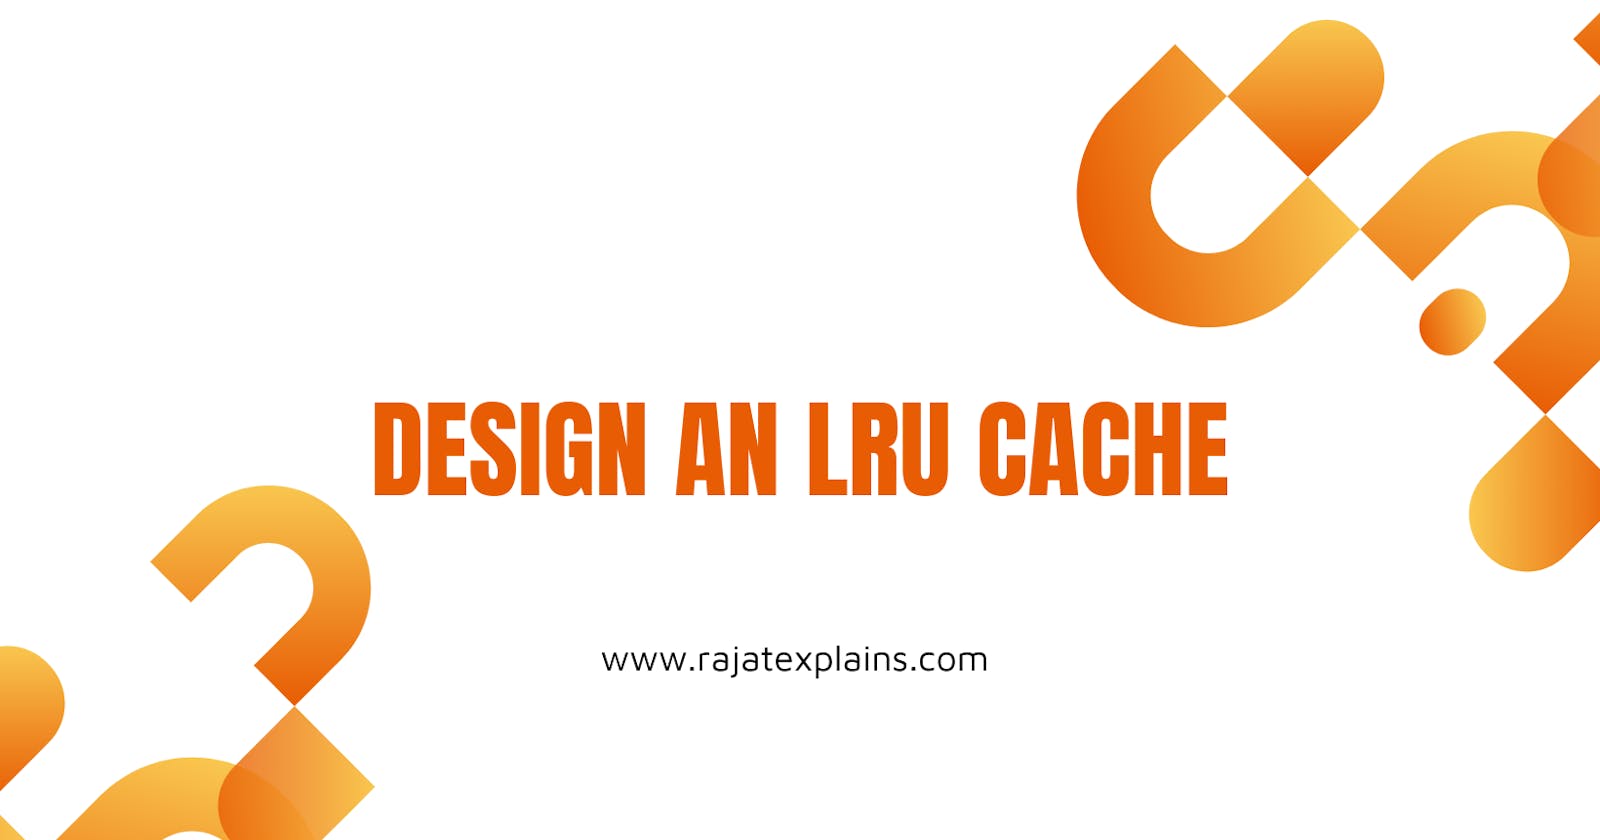 Design an LRU cache